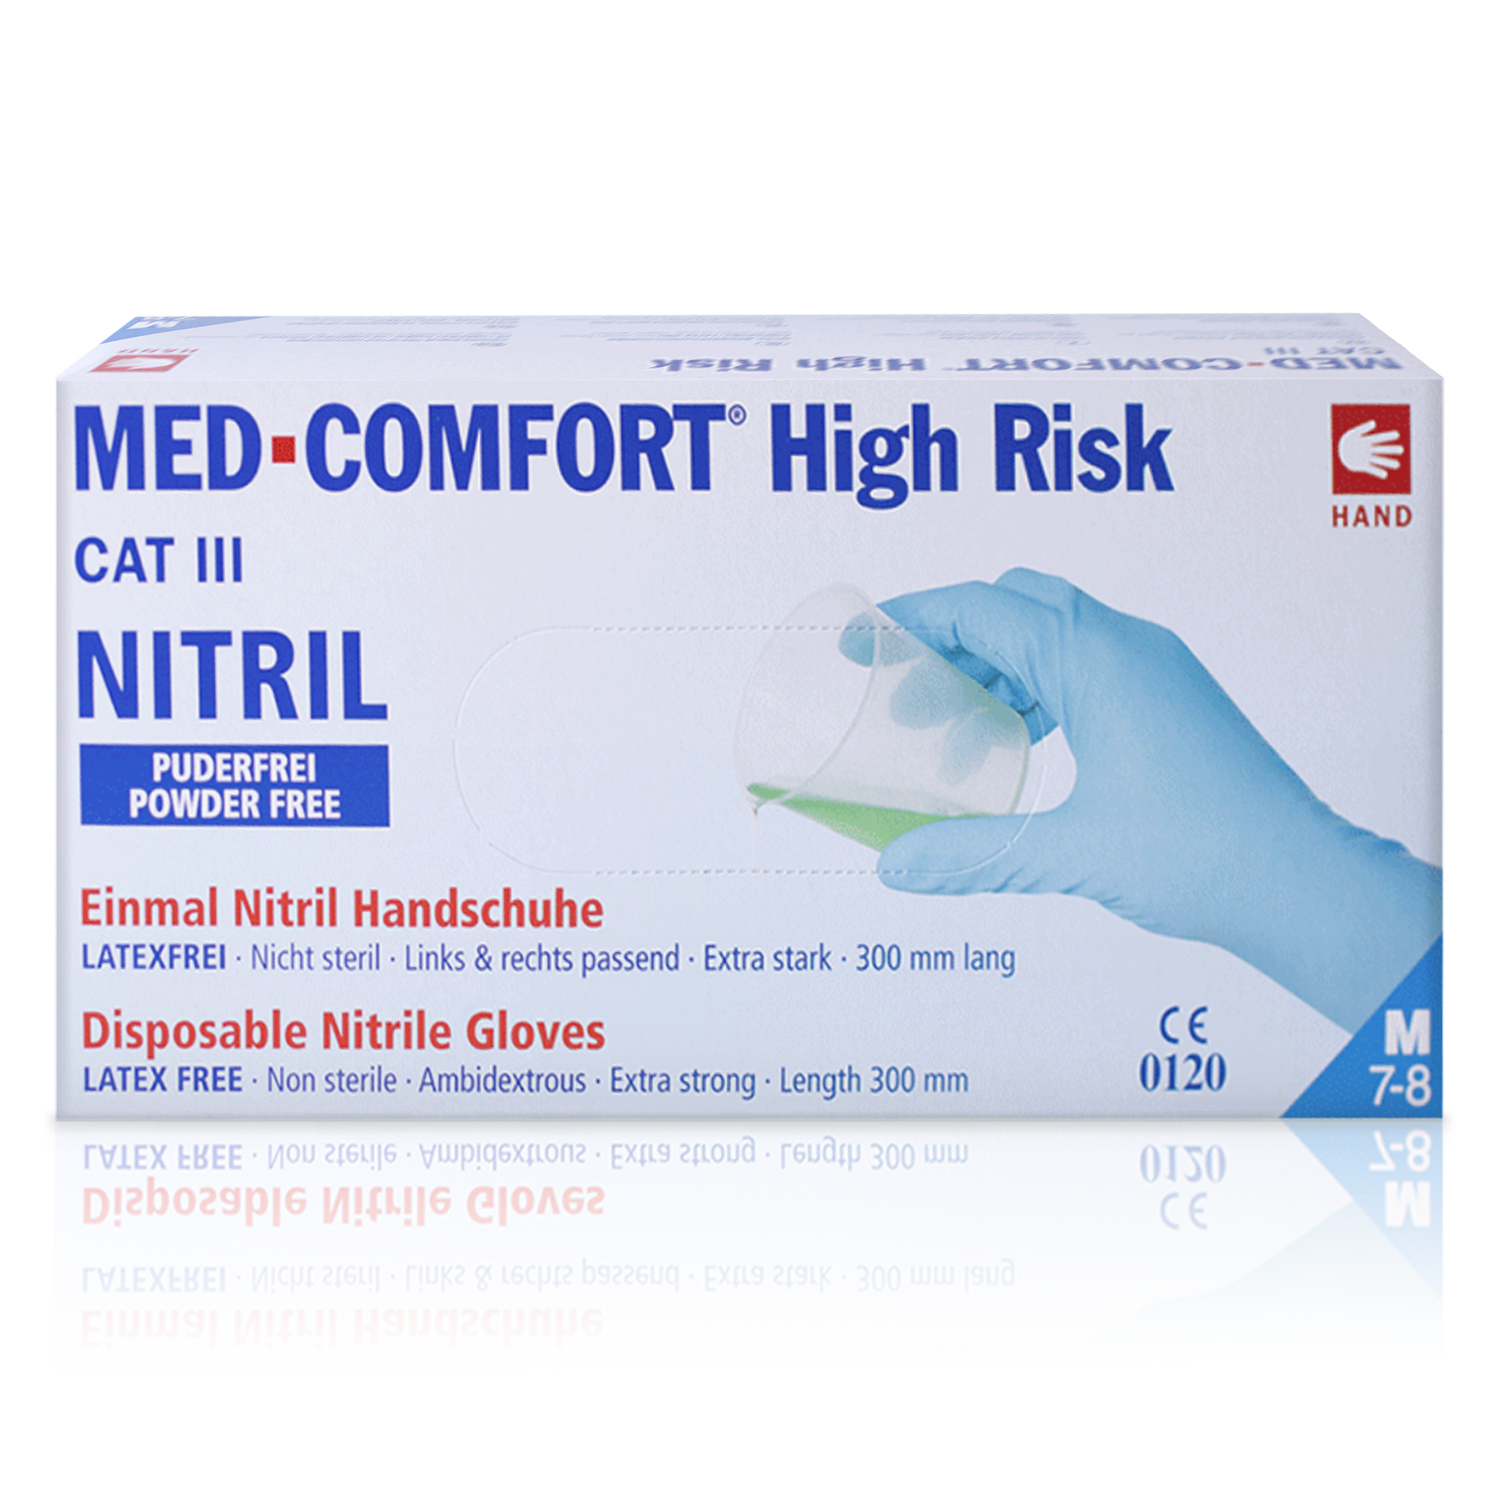 High Risk Comfort Nitril Chemikalienschutzhandschuh Extra stark